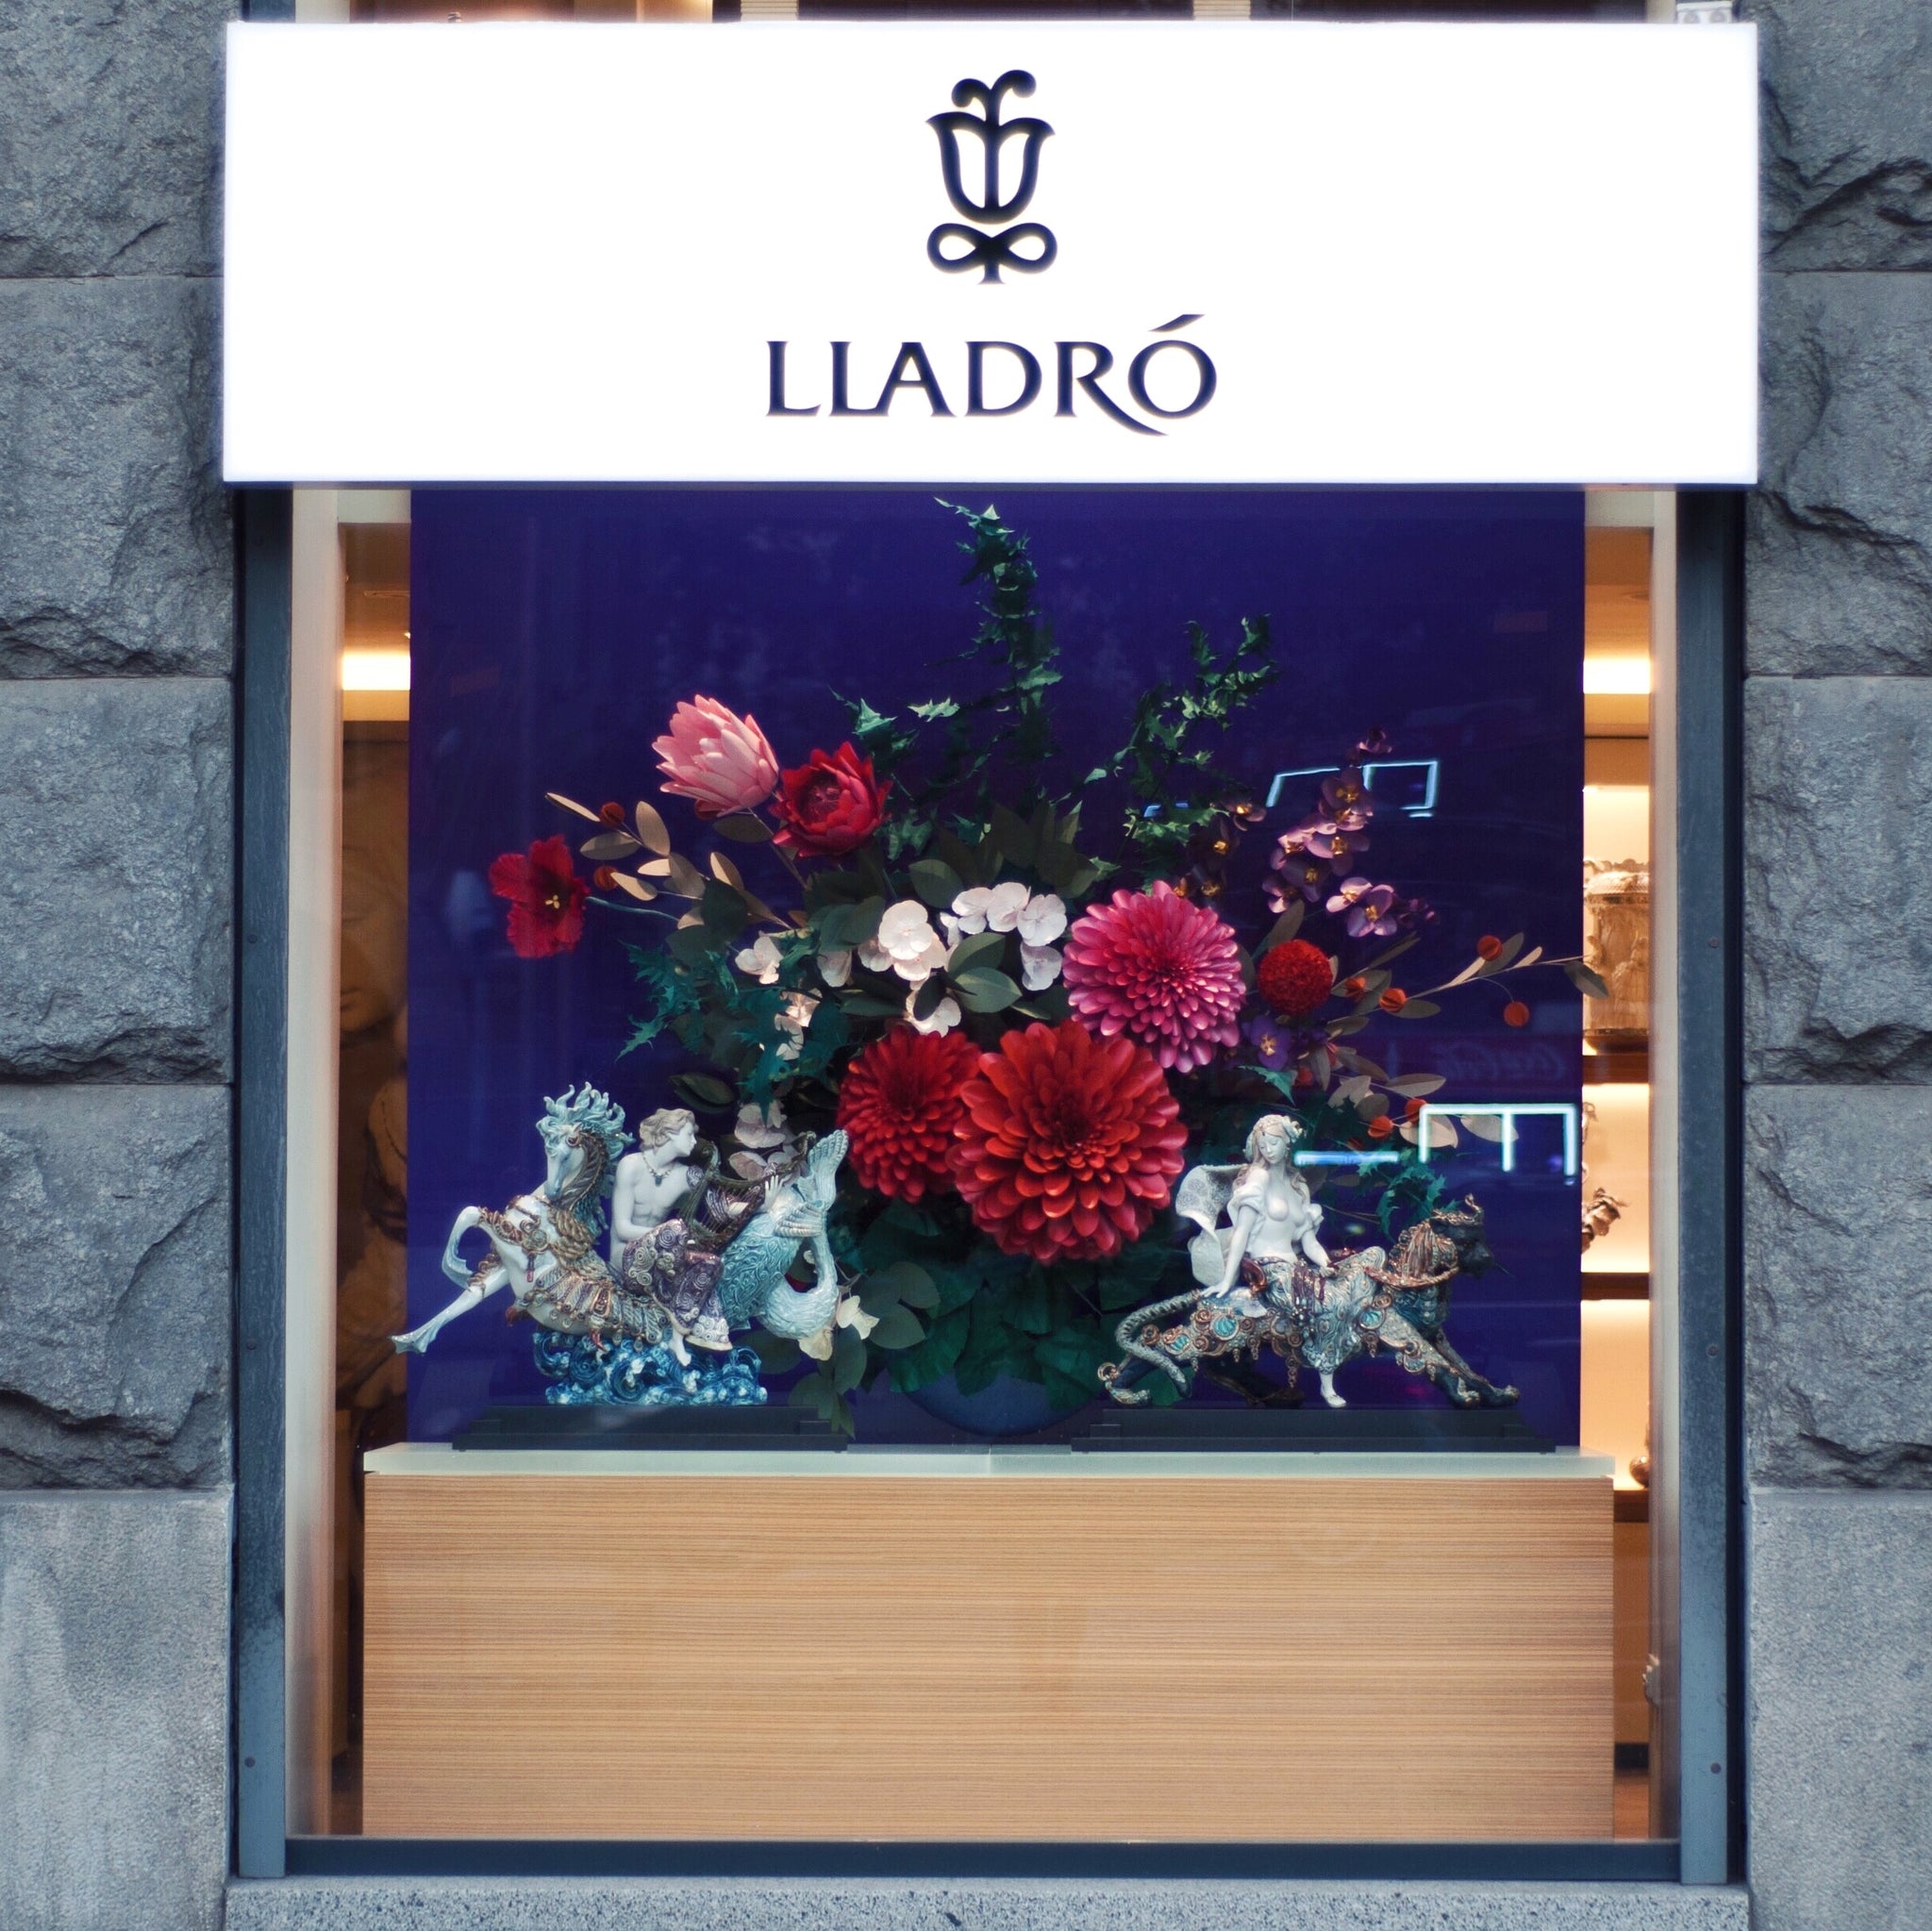 Lladro paper flowers